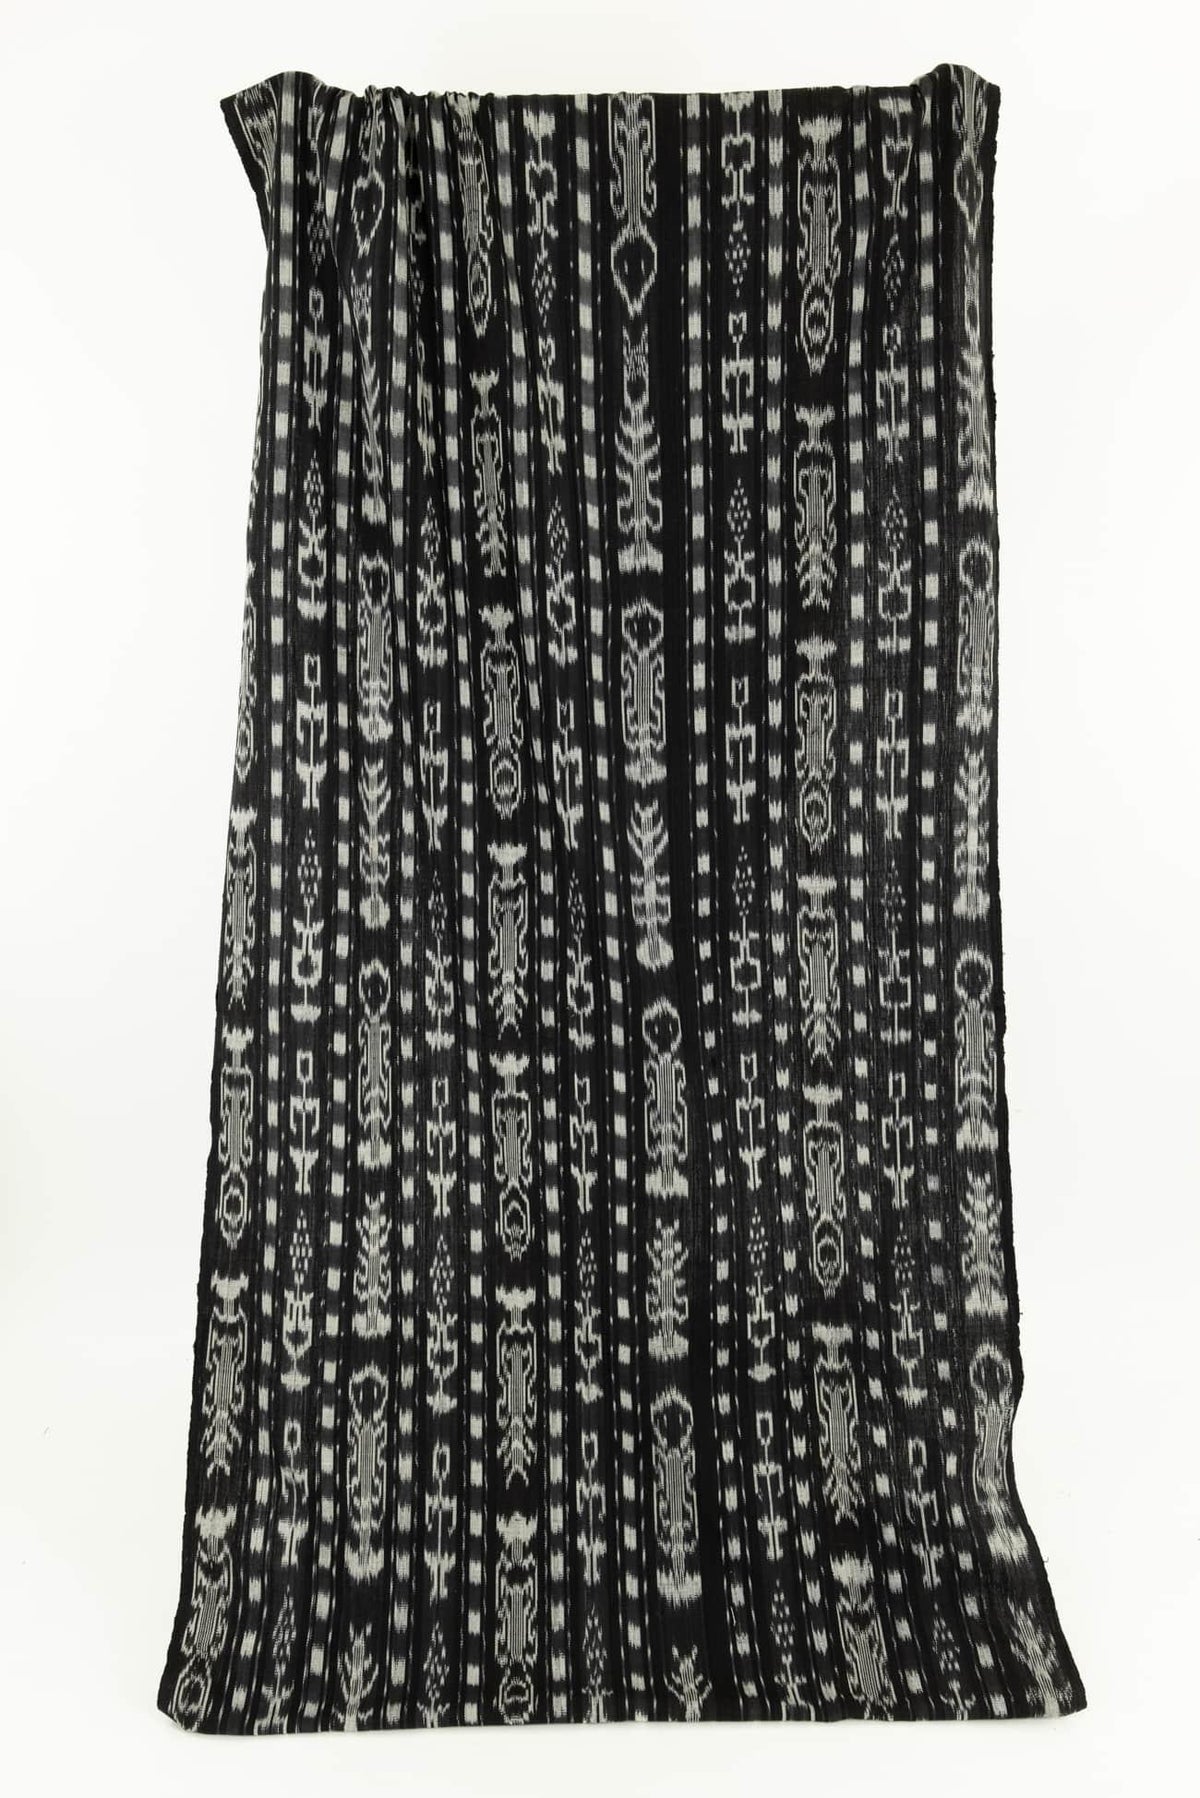 Bernardo Cotton Ikat Woven - Marcy Tilton Fabrics